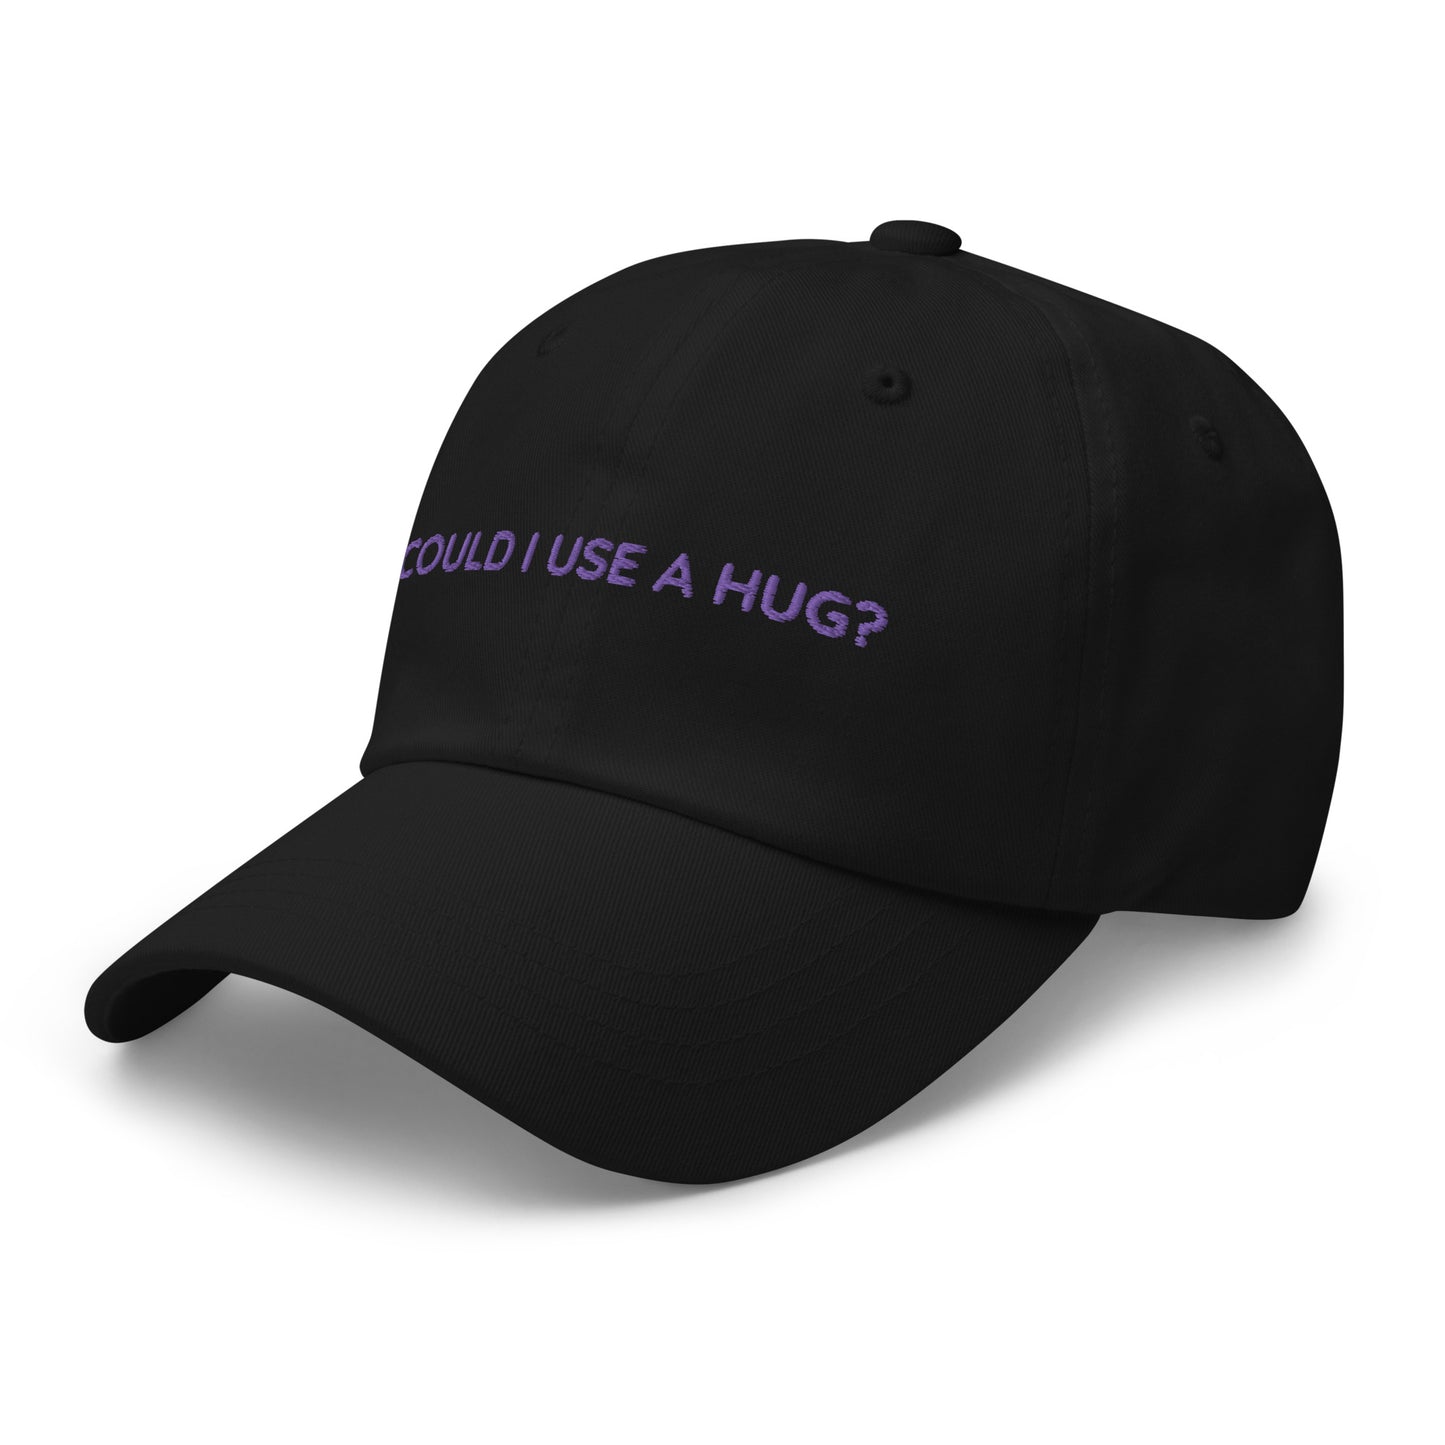 Embroidered Baseball Cap ‘COULD I USE A HUG?’